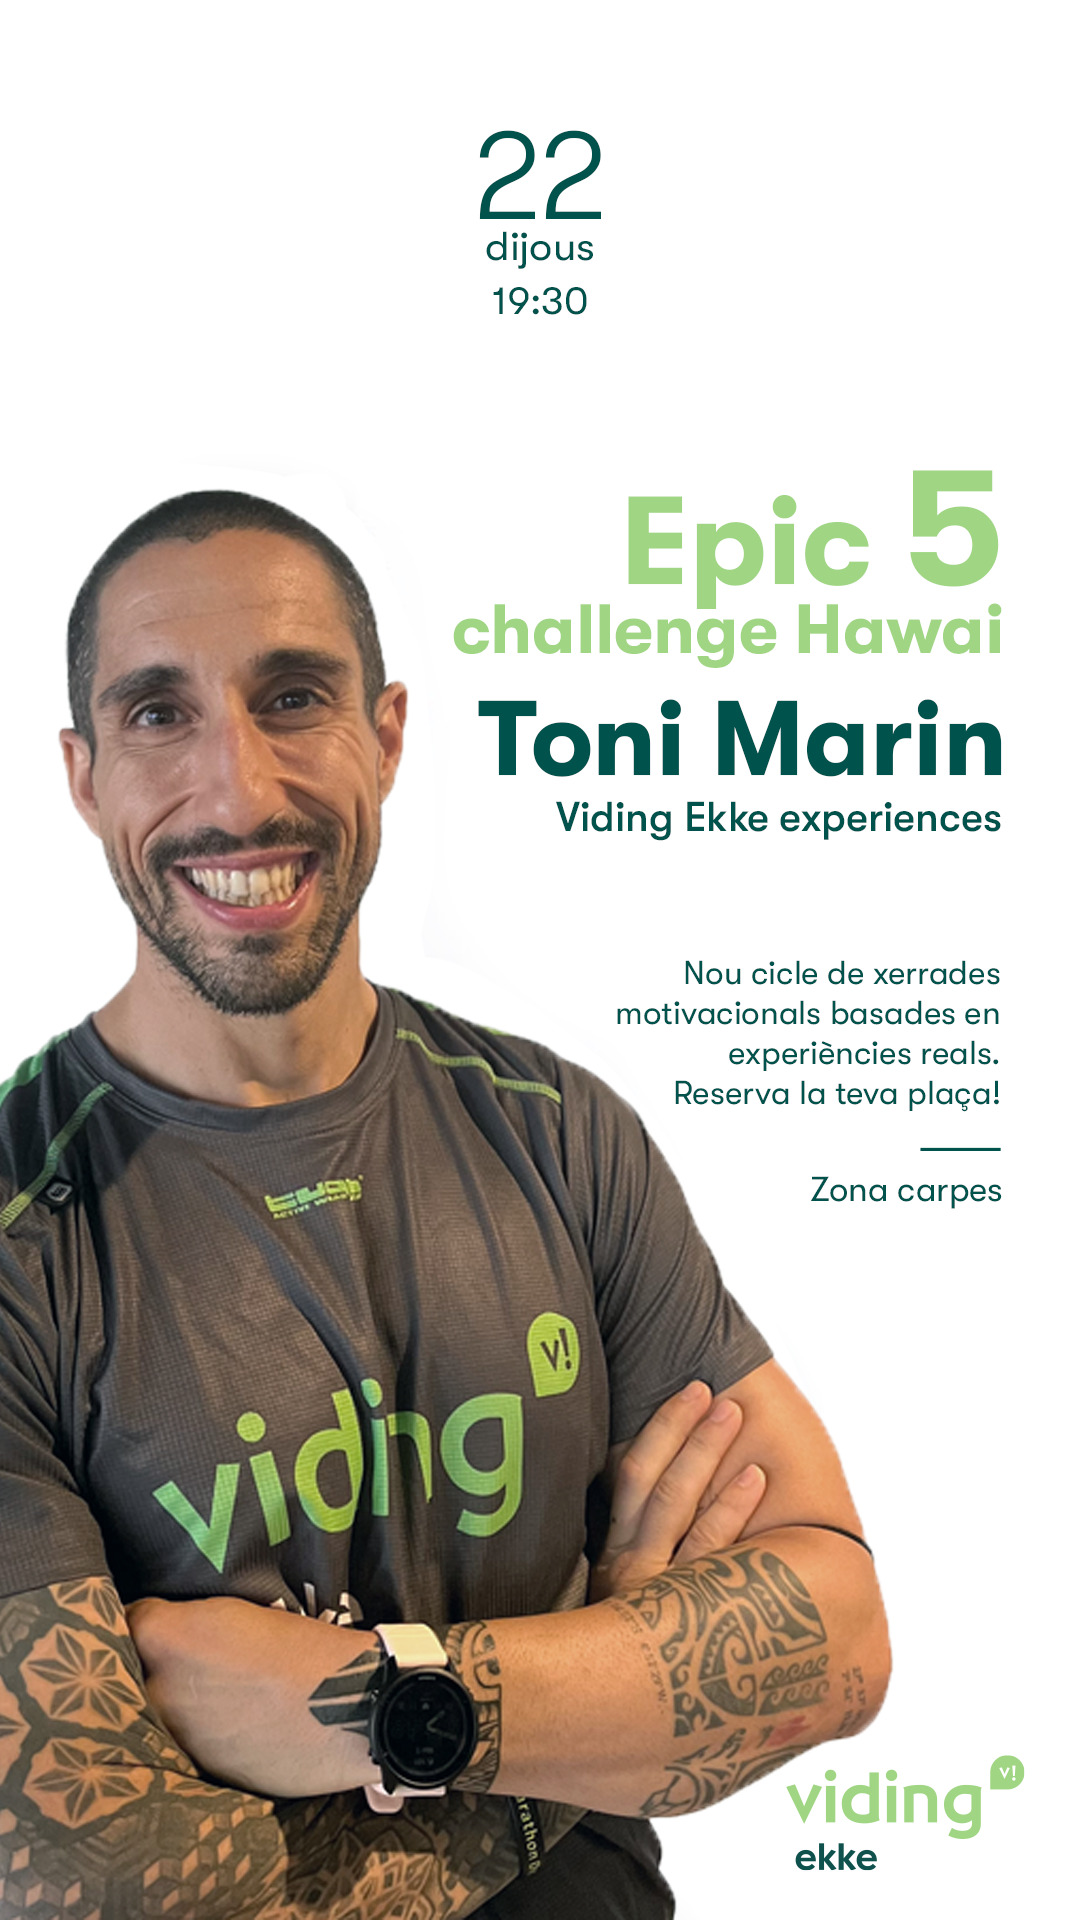 VIDING EKKE EXPERIENCES: EPIC 5 CHALLENGE HAWAI Toni Marin